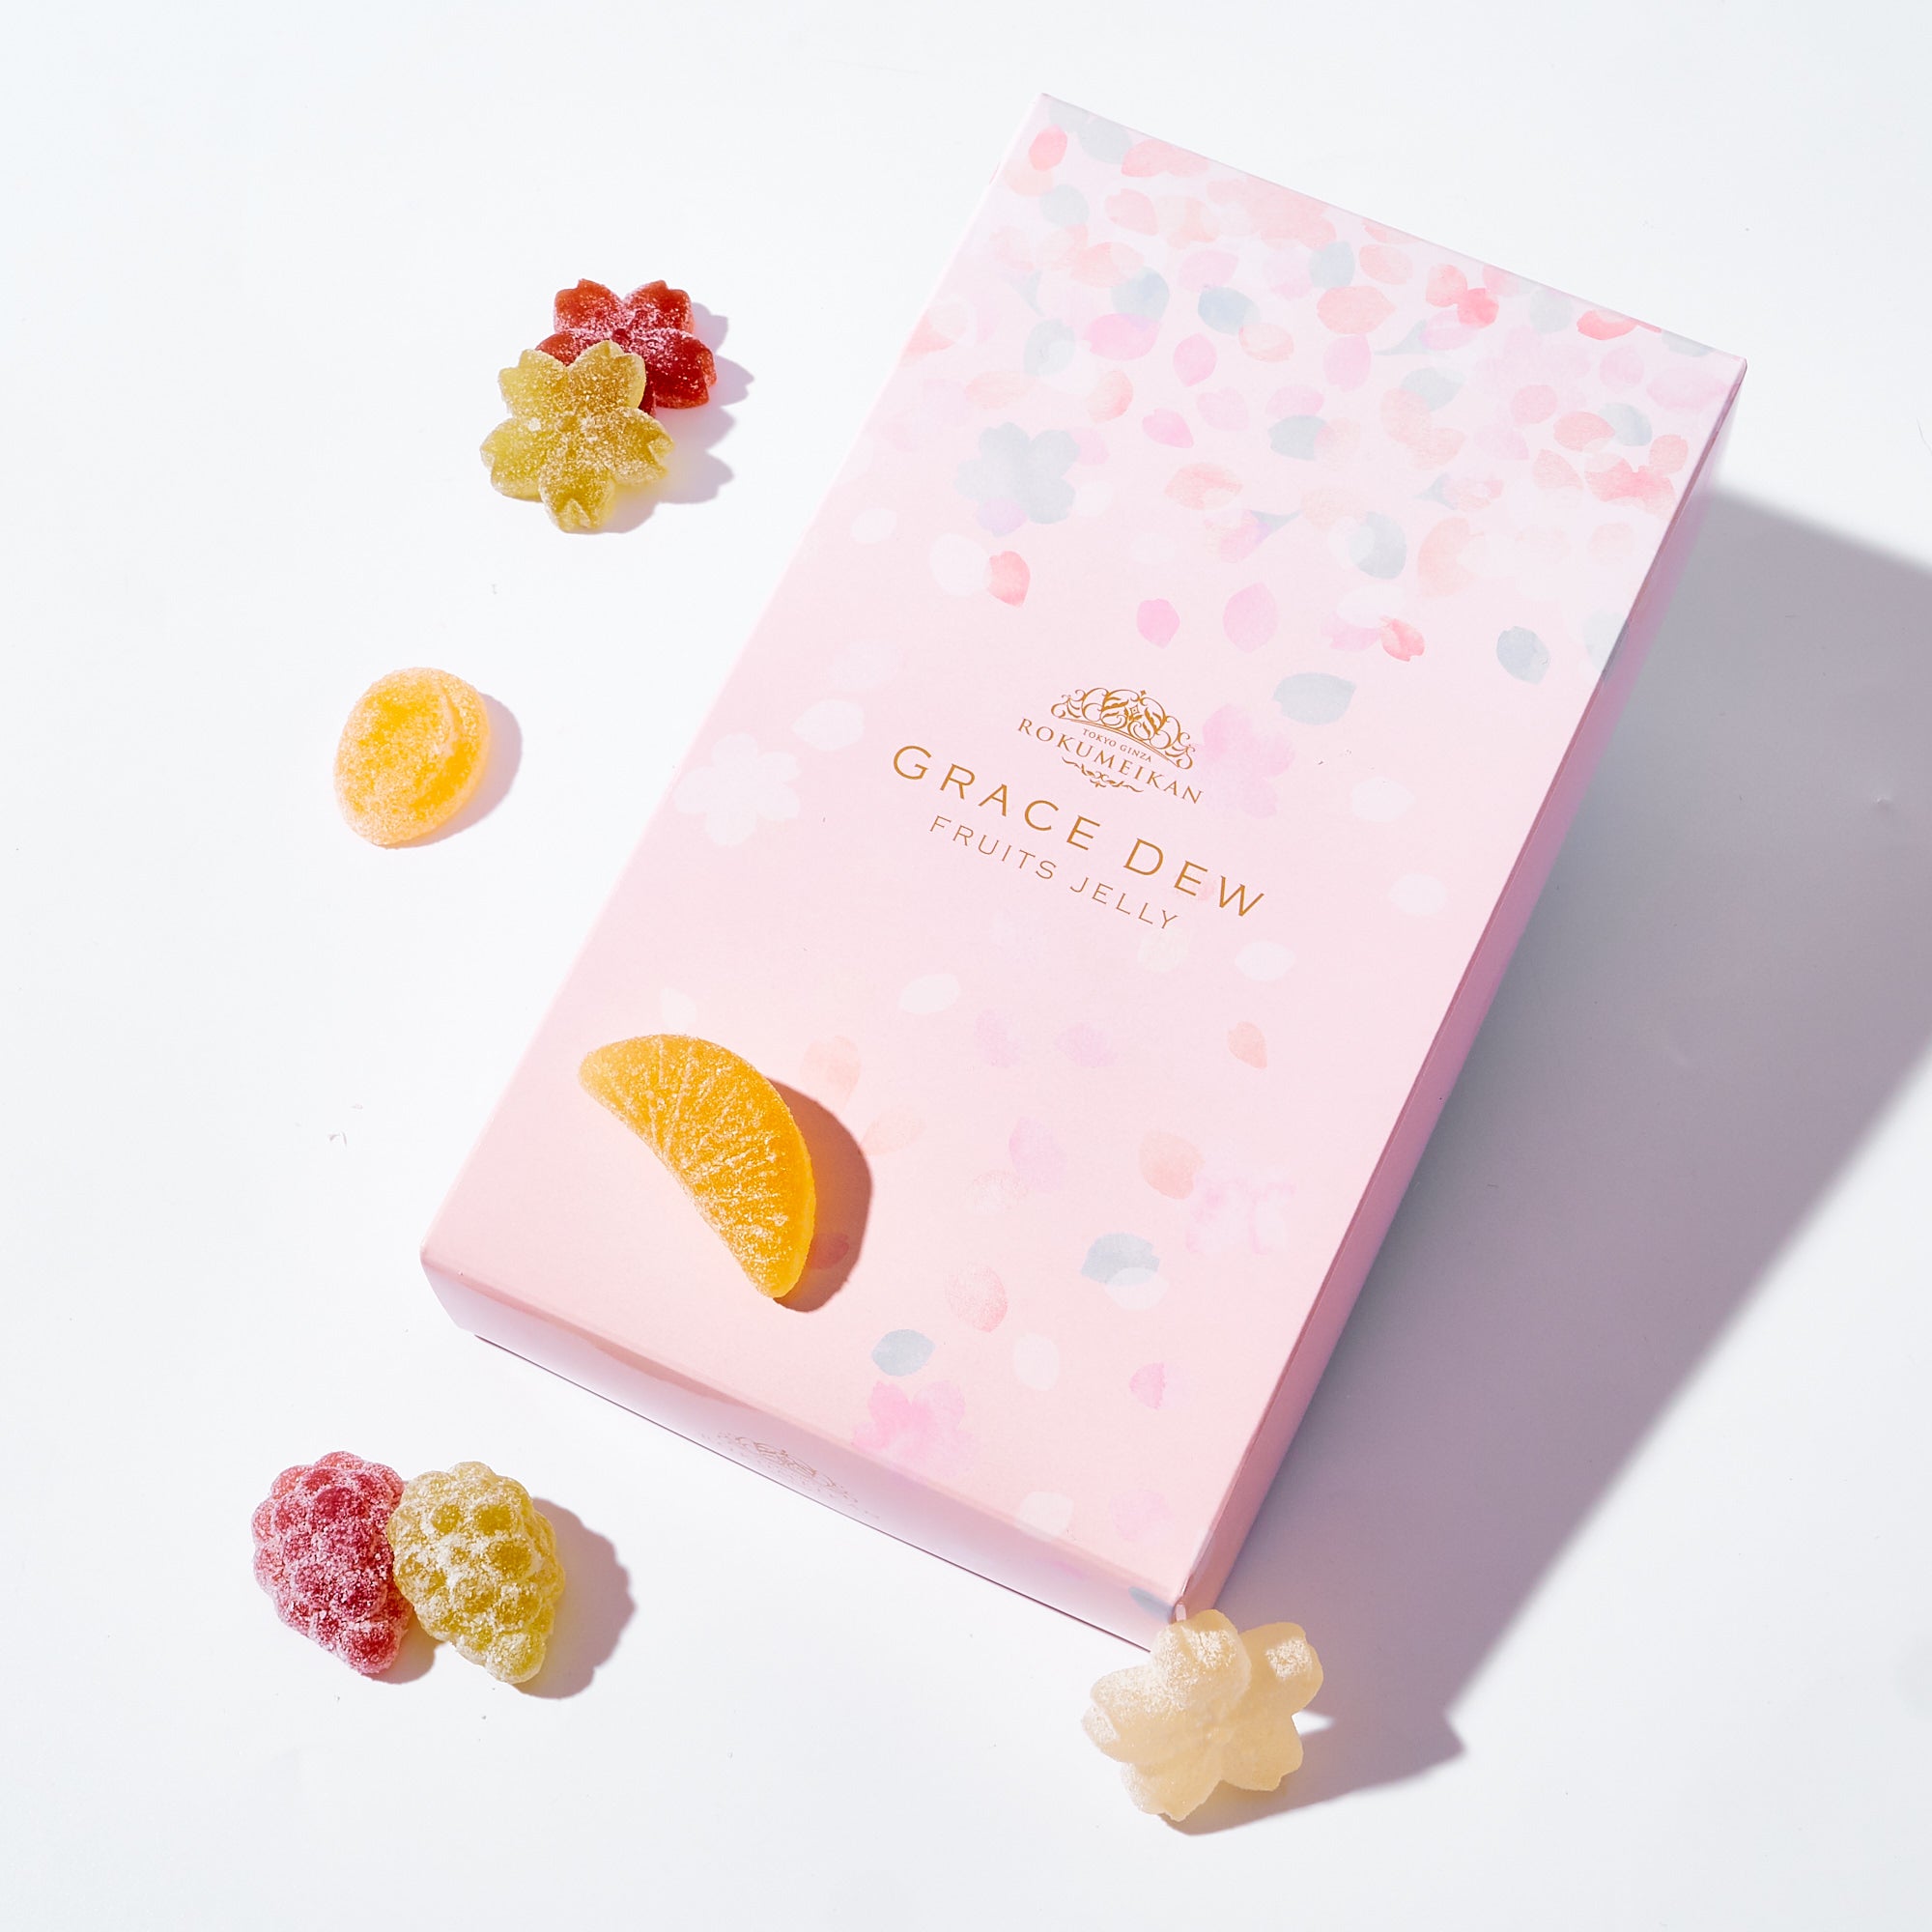 Royce Baton Cookies Sakura Berry, Mini Mart